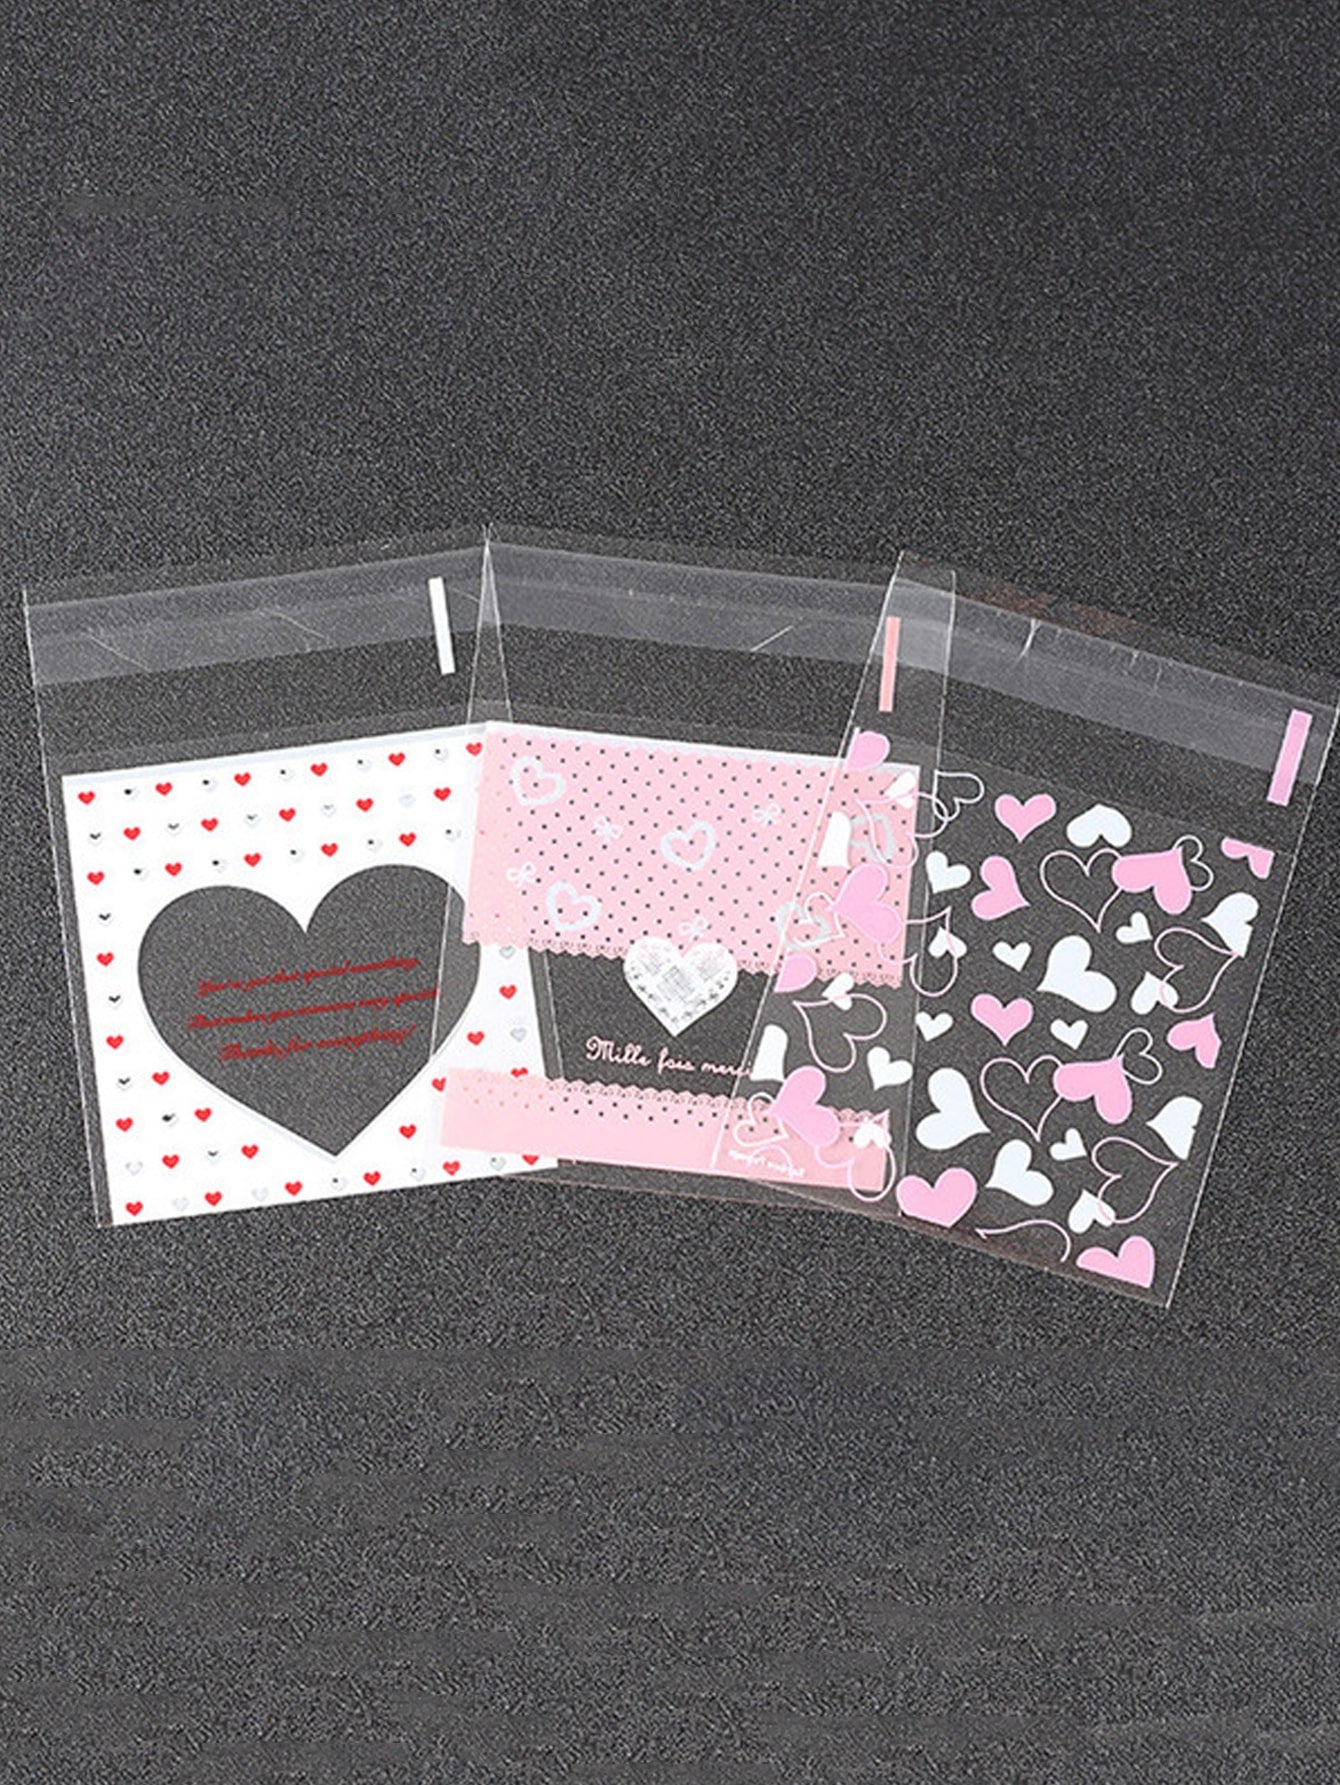 100pcs Heart Print Random Packaging Bag Self-Adhesive Candy Bag Cellophane